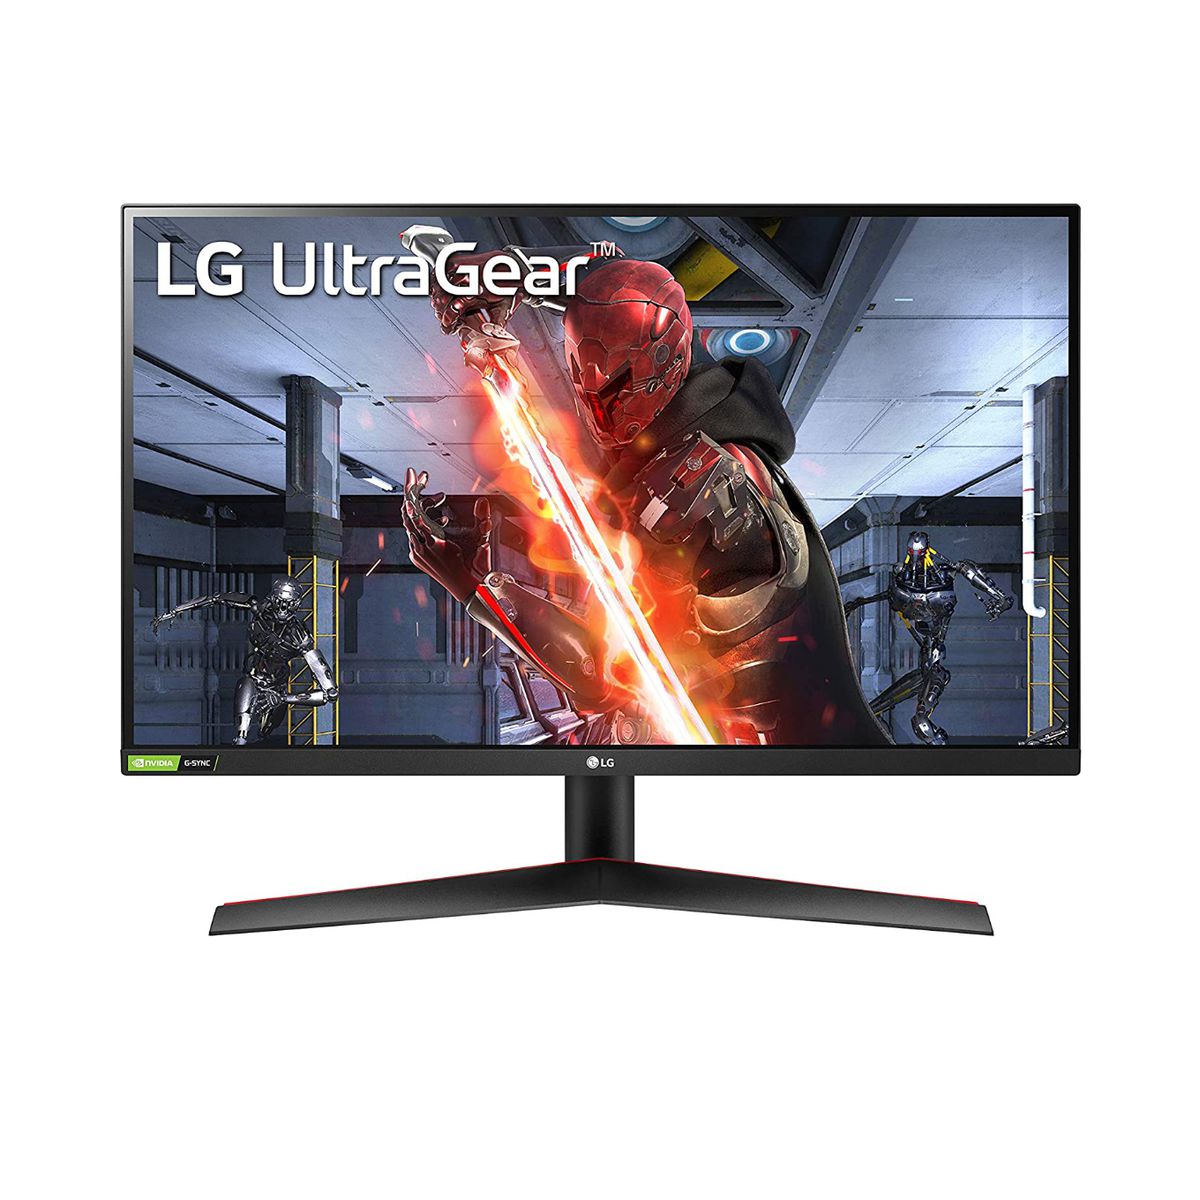 Lg ultragear gaming monitor